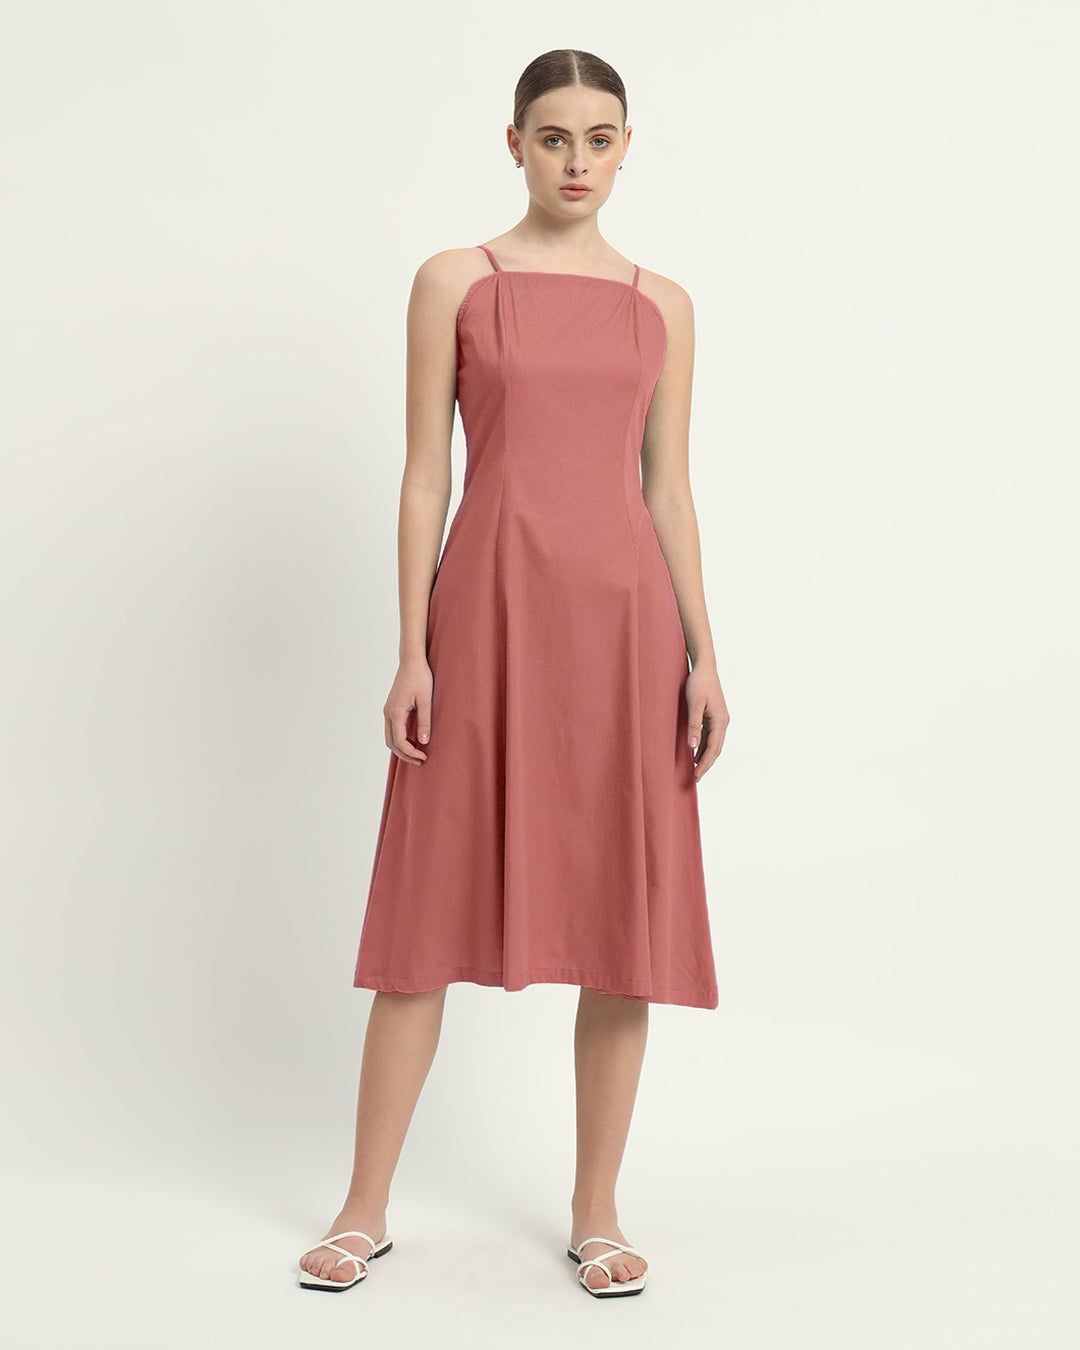 The Valatie  Ivory Pink Cotton Dress